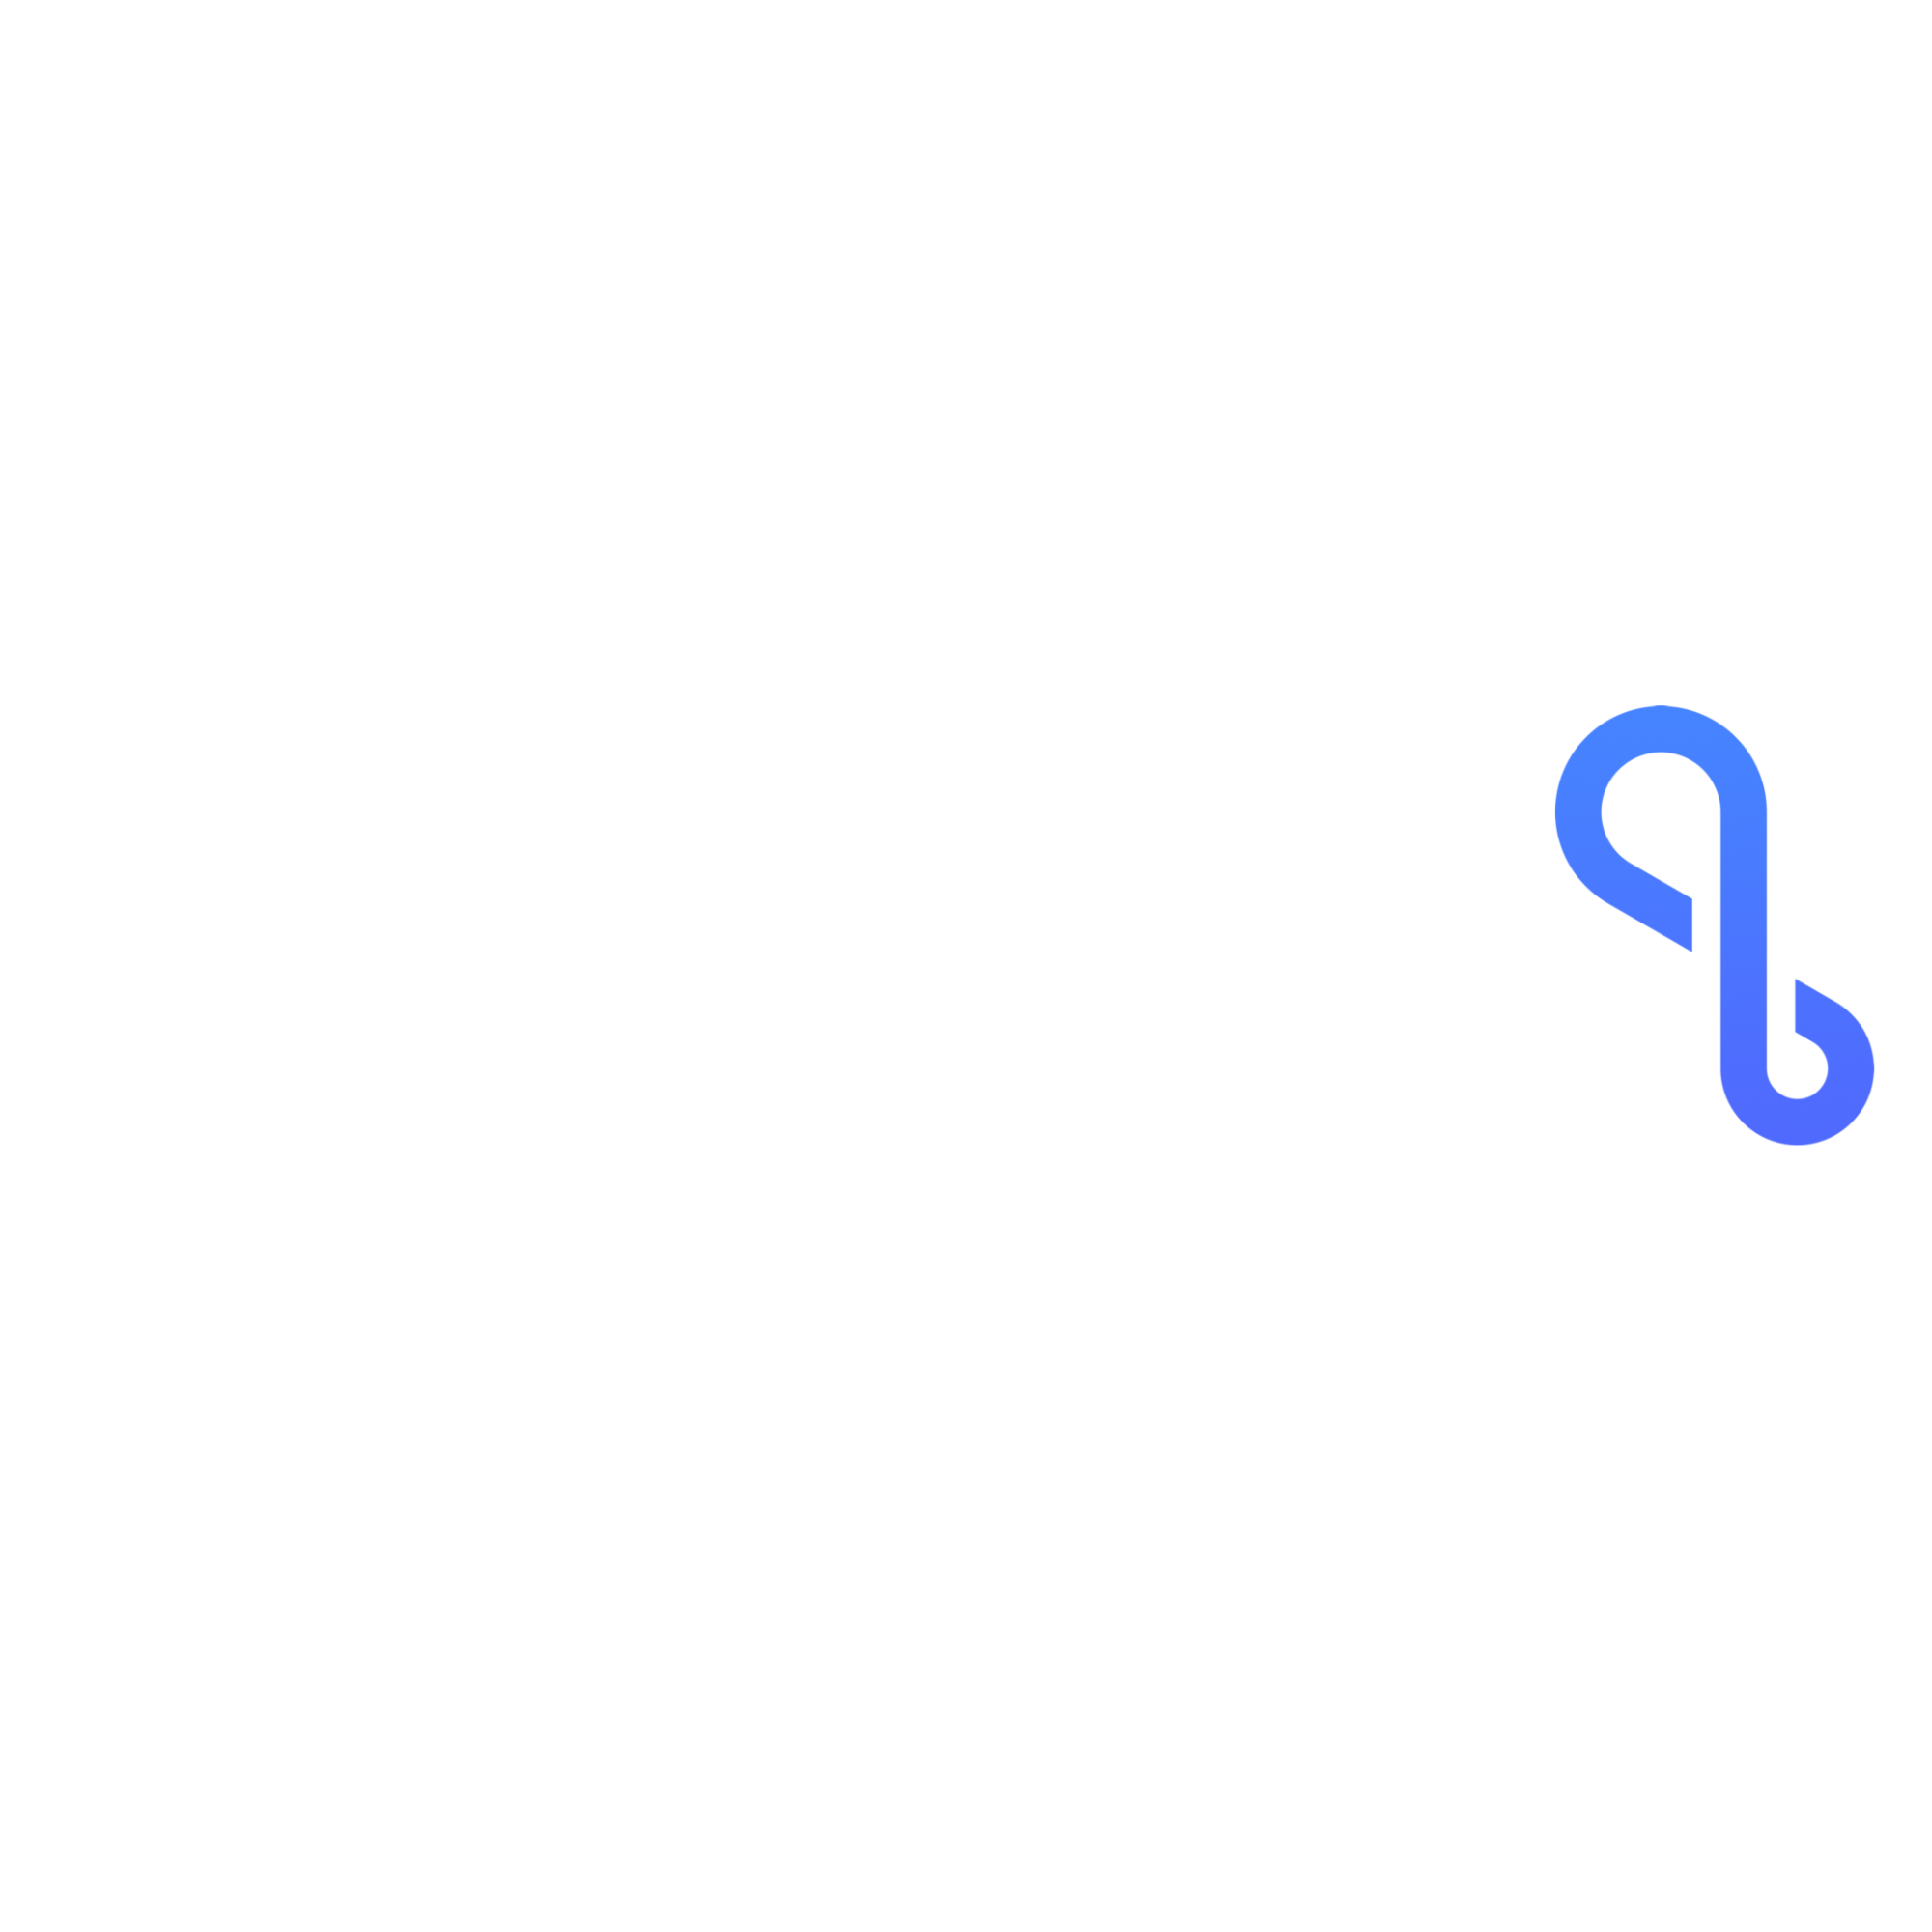 interfinity - The interfinity Logo